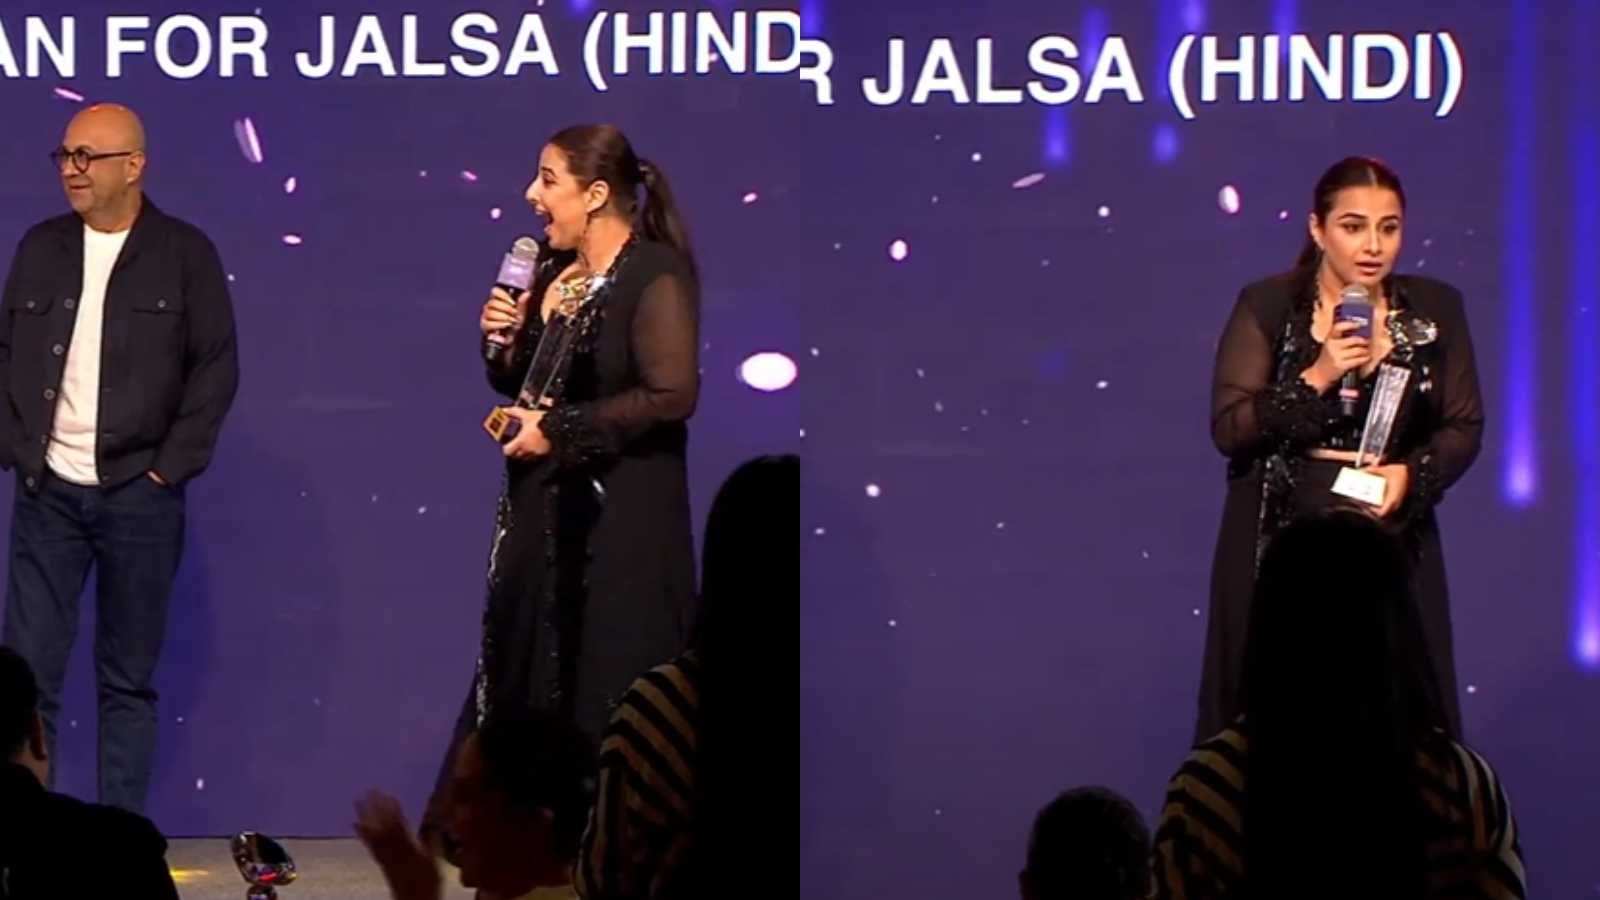 Vidya Balan hilariously goofs up winning speech for Jalsa thinking it's for Sherni: 'Dono mein performance itni achi thi sa maan bhi gaye'